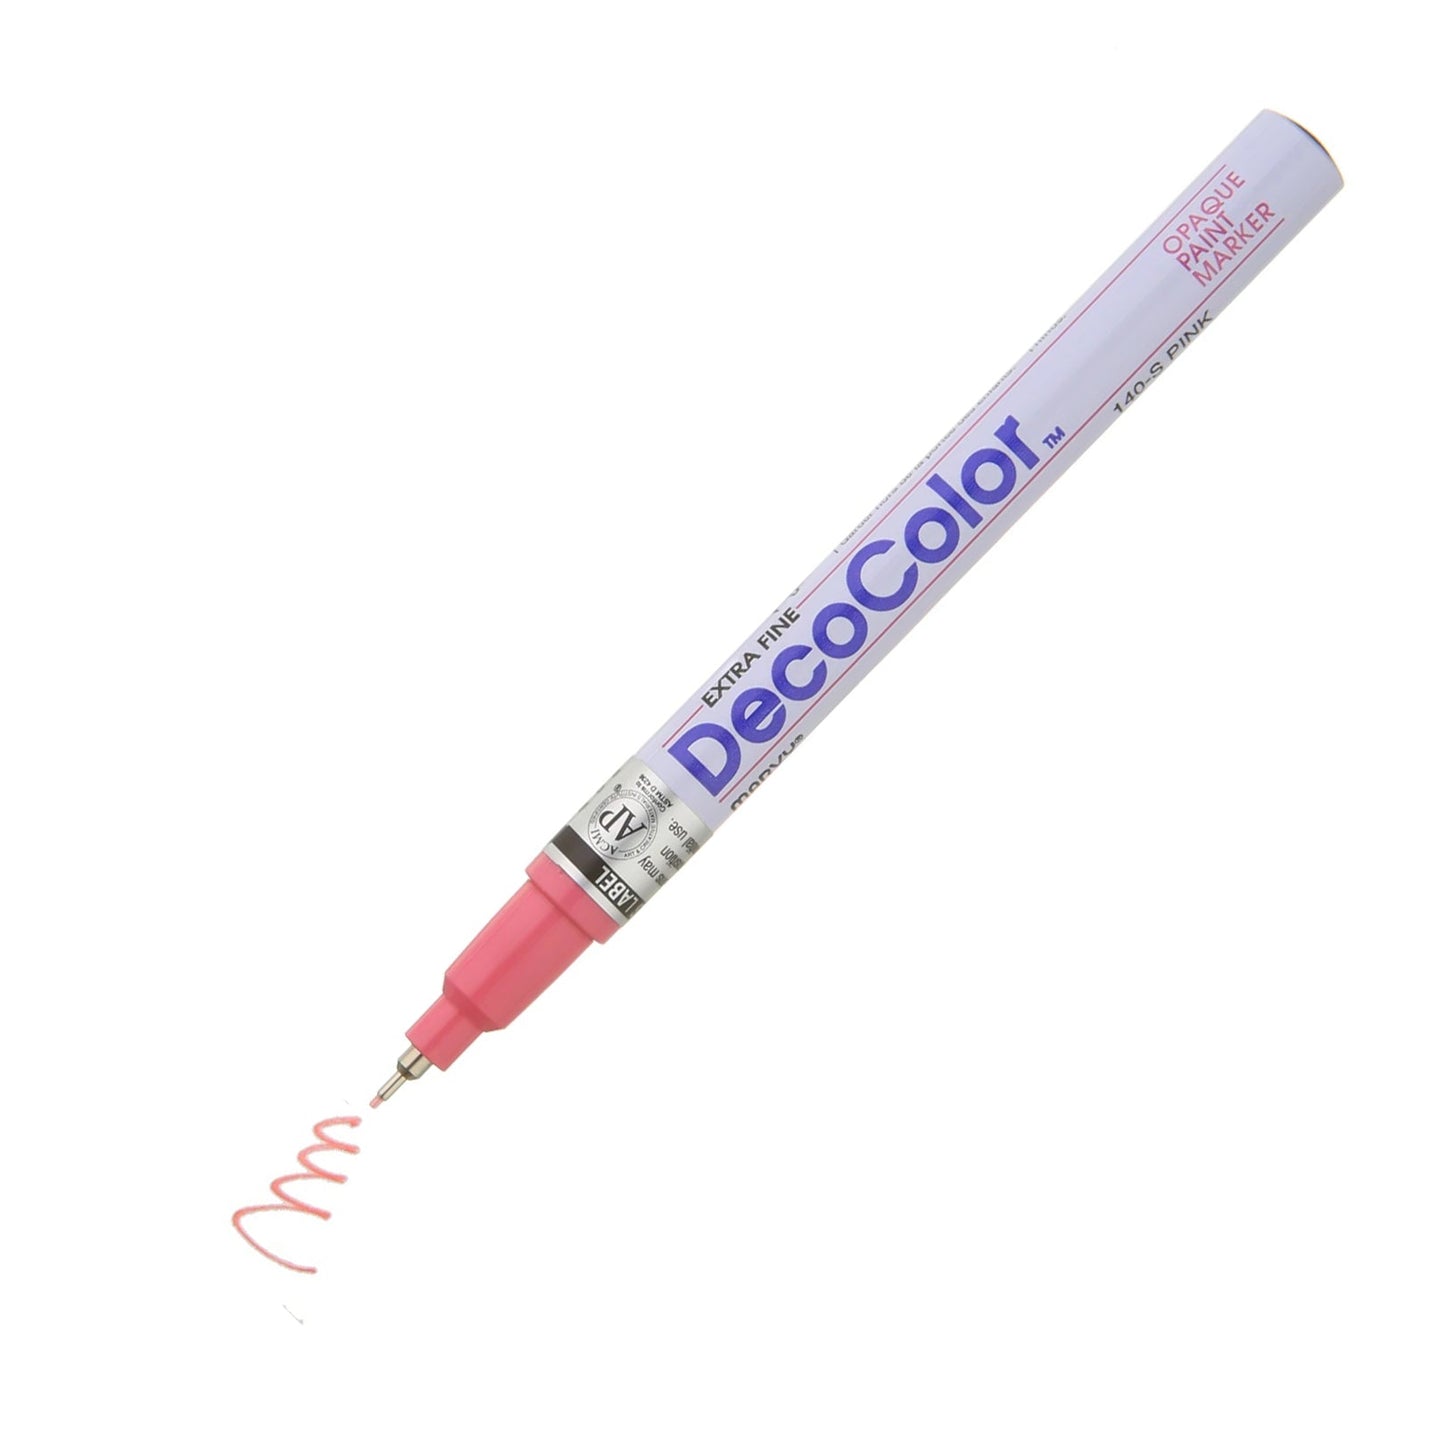 Decocolor verfmarker, 0,8 mm extra fijne Specialtech-punt